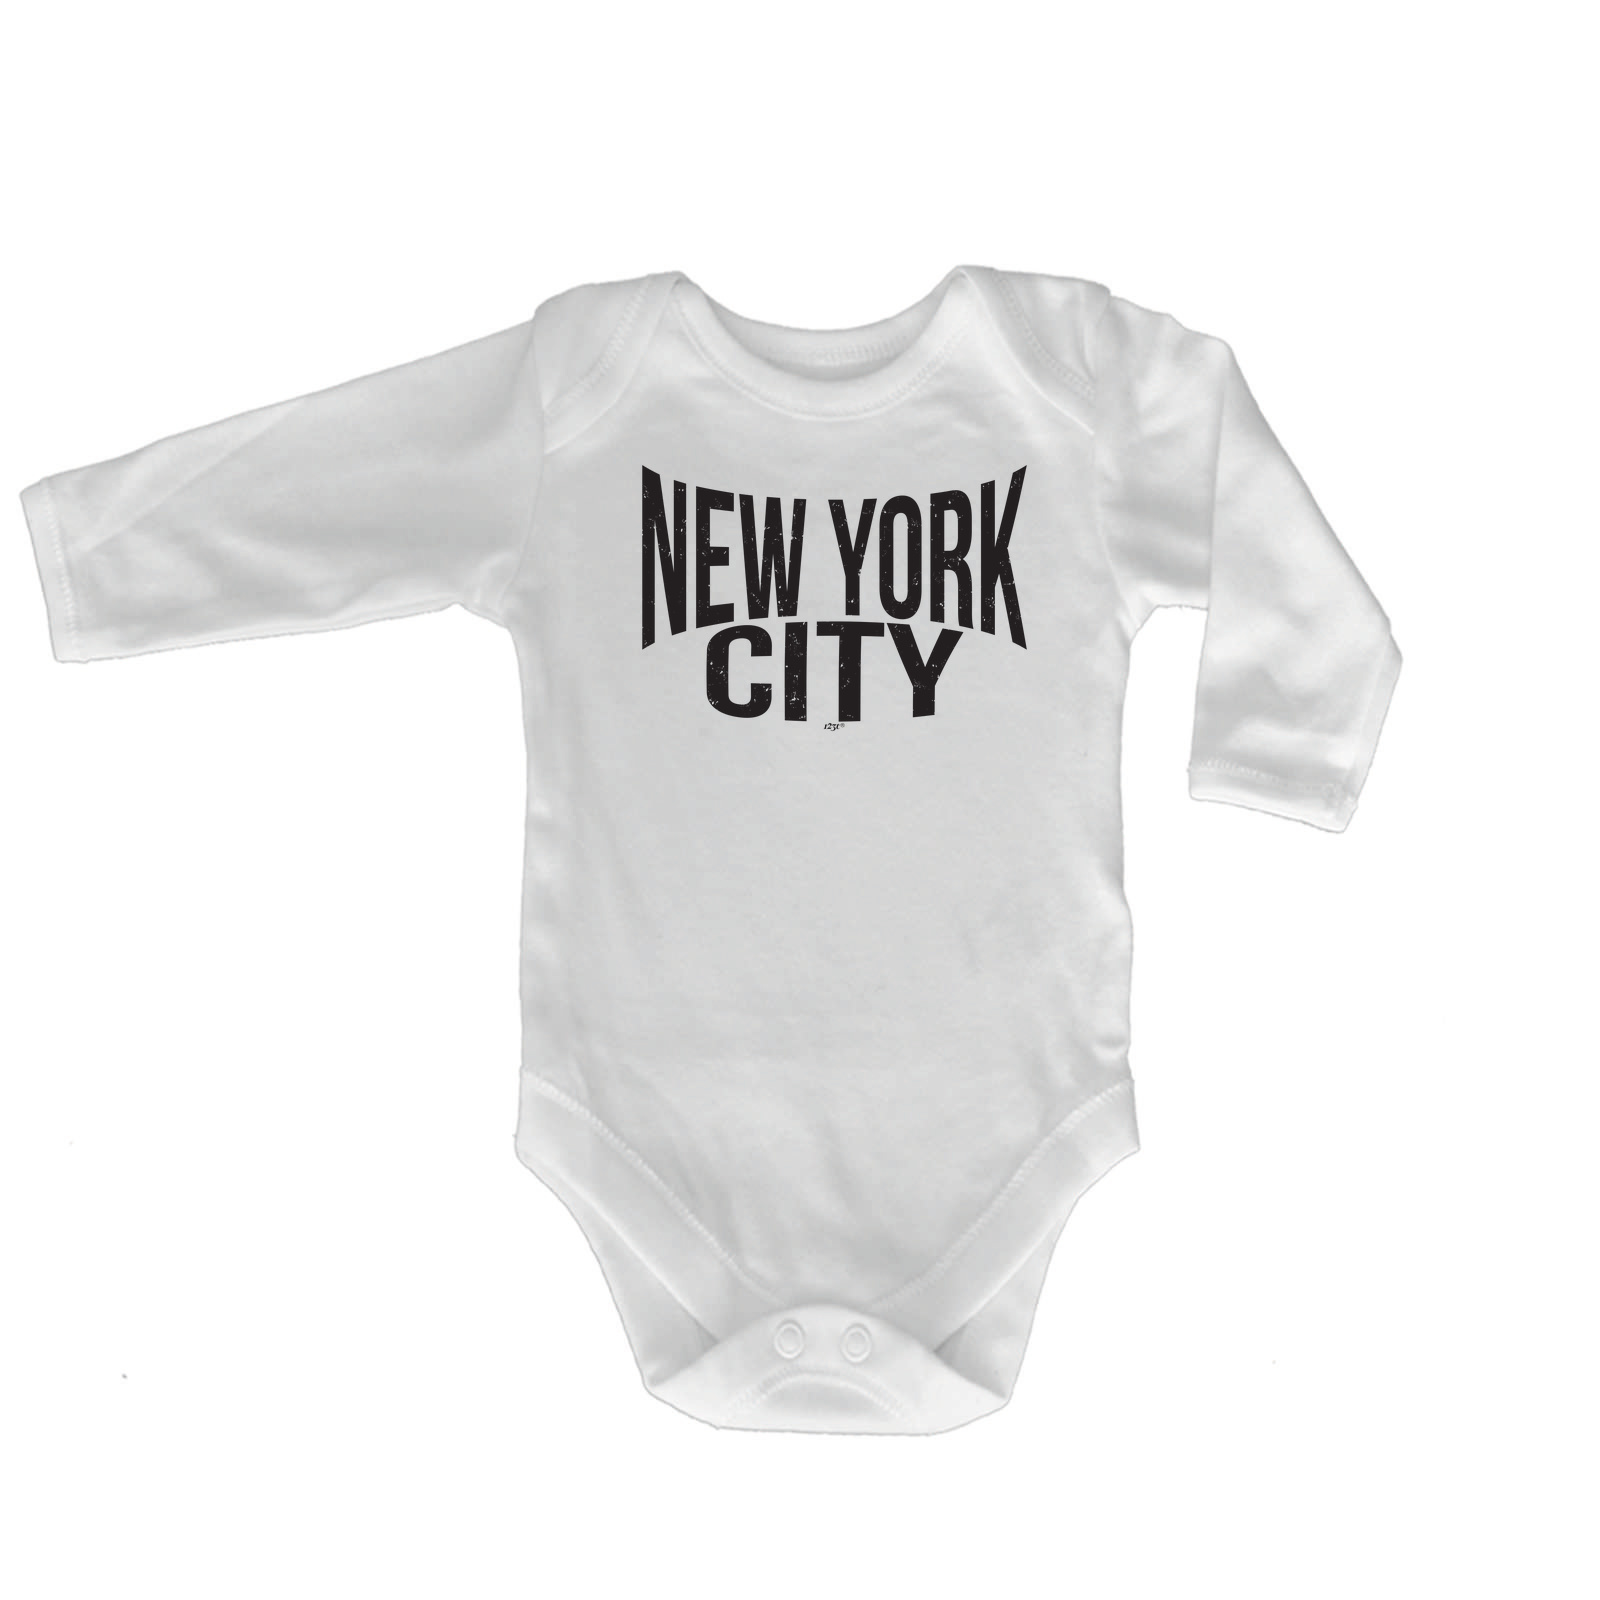 Funny Baby Infants Babygrow Romper Jumpsuit - New York City | eBay